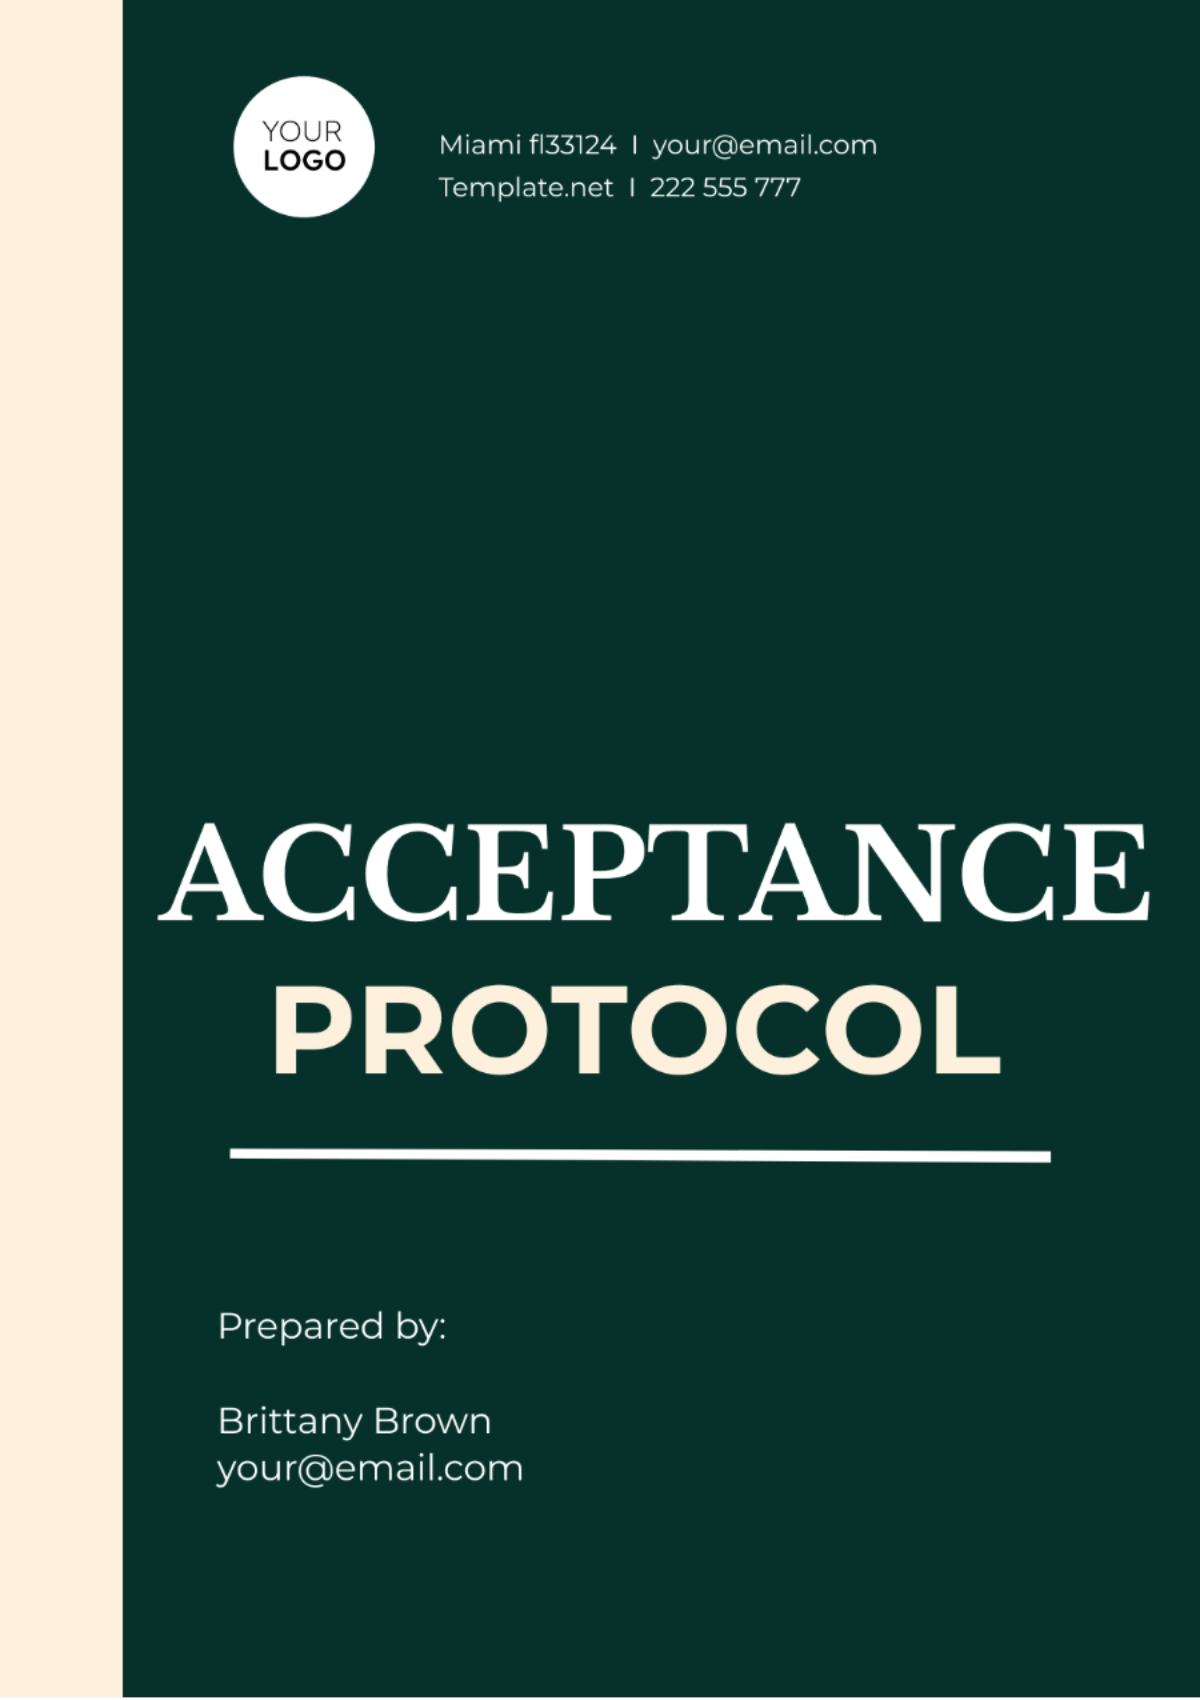 Acceptance Protocol Template